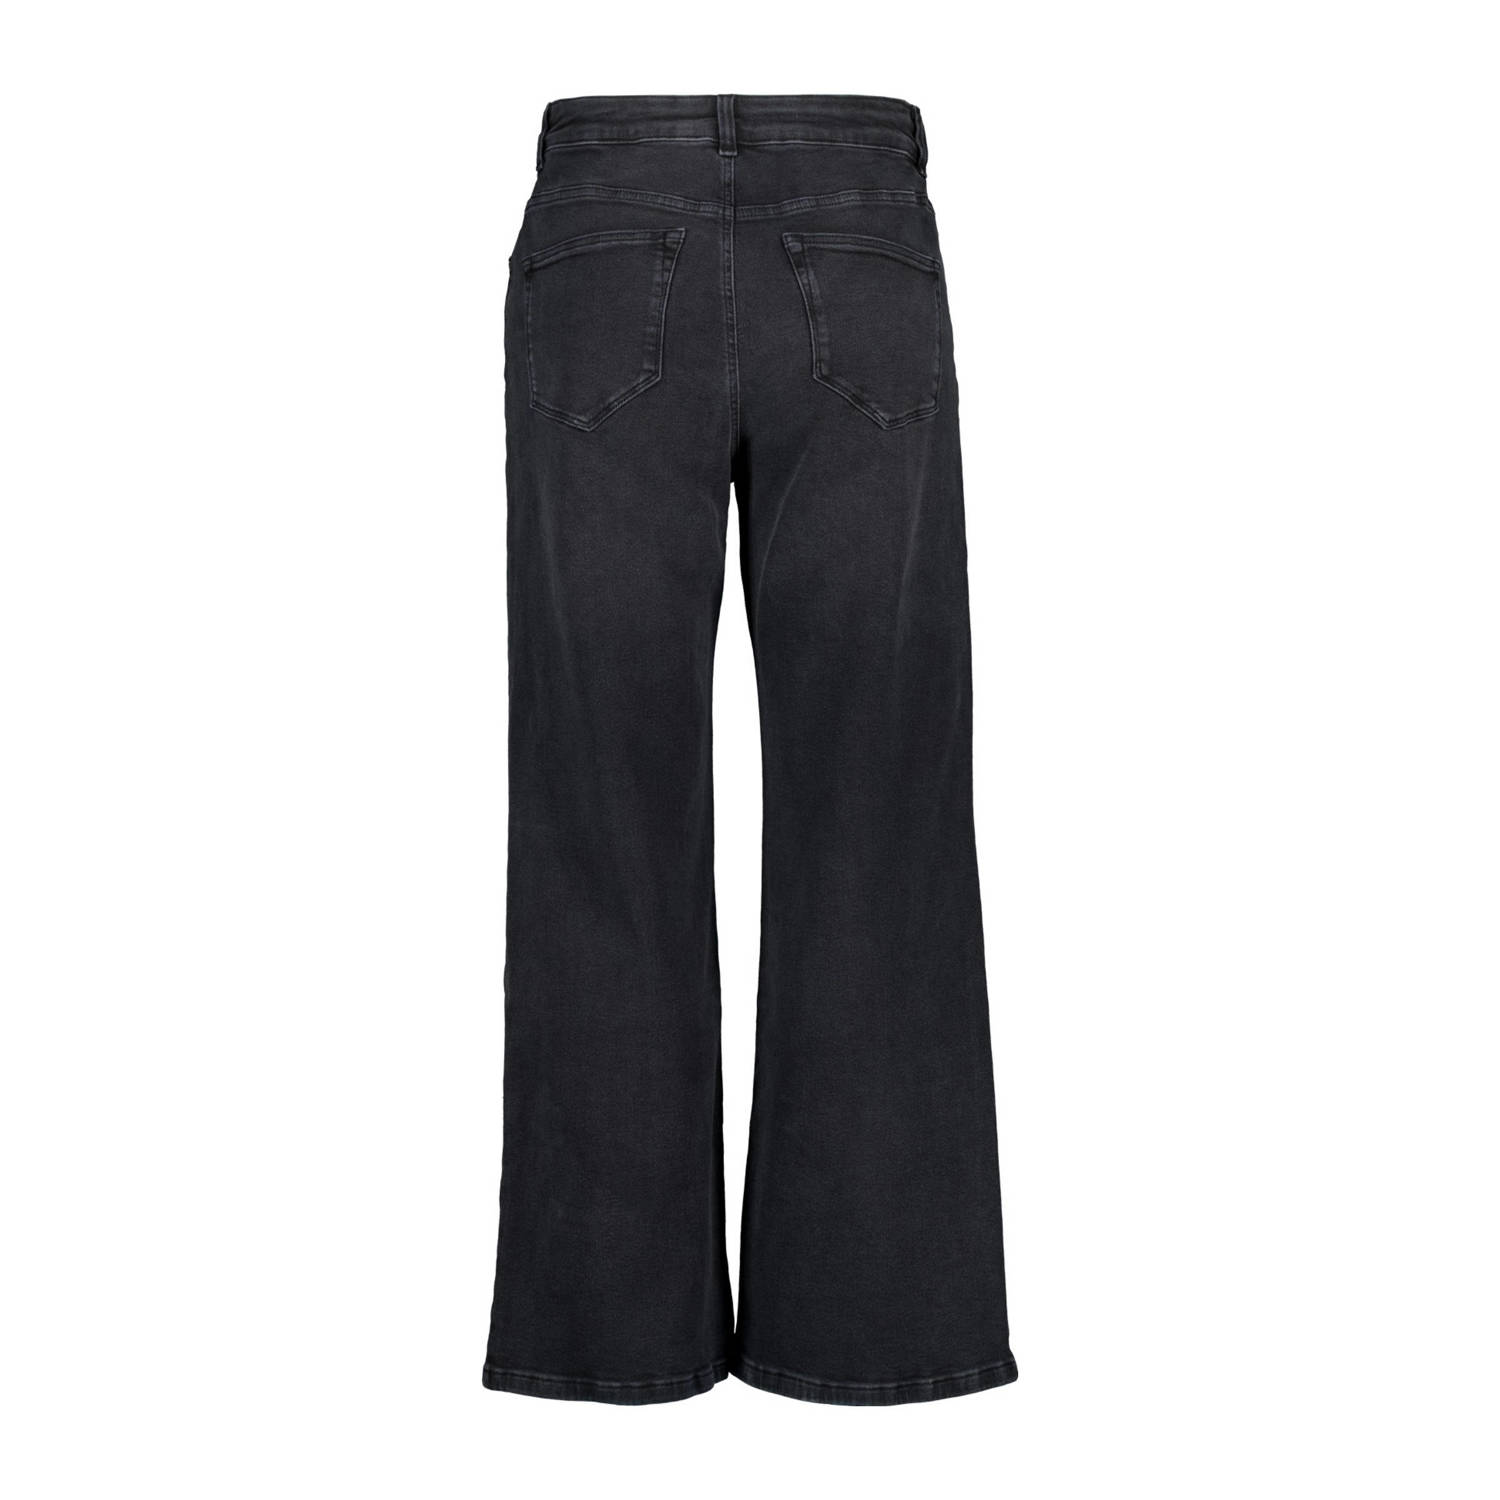 MS Mode wide leg jeans grey denim